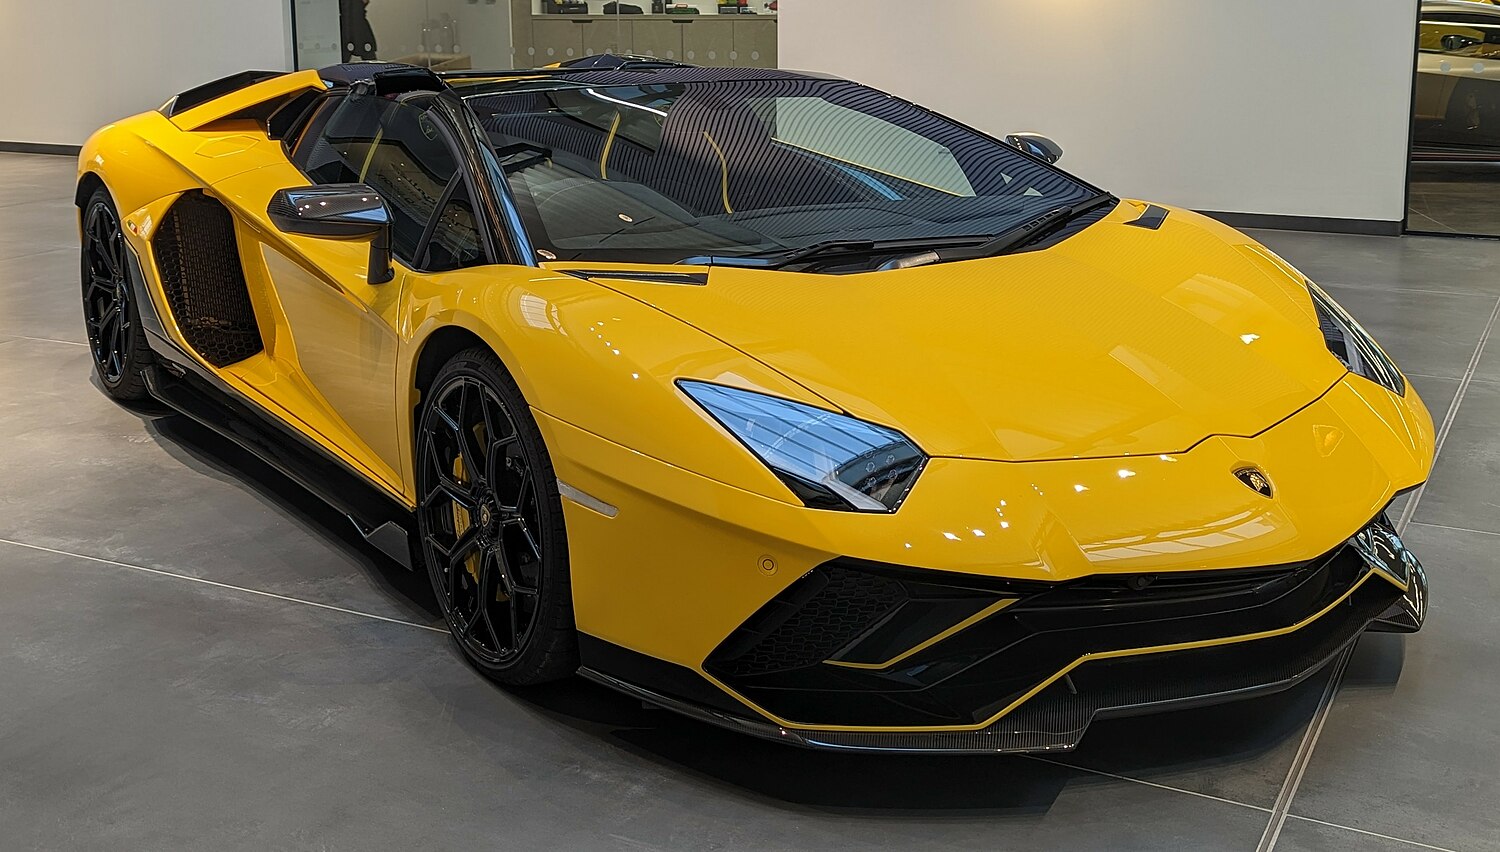 Lamborghini Sián FKP 37 - Wikipedia